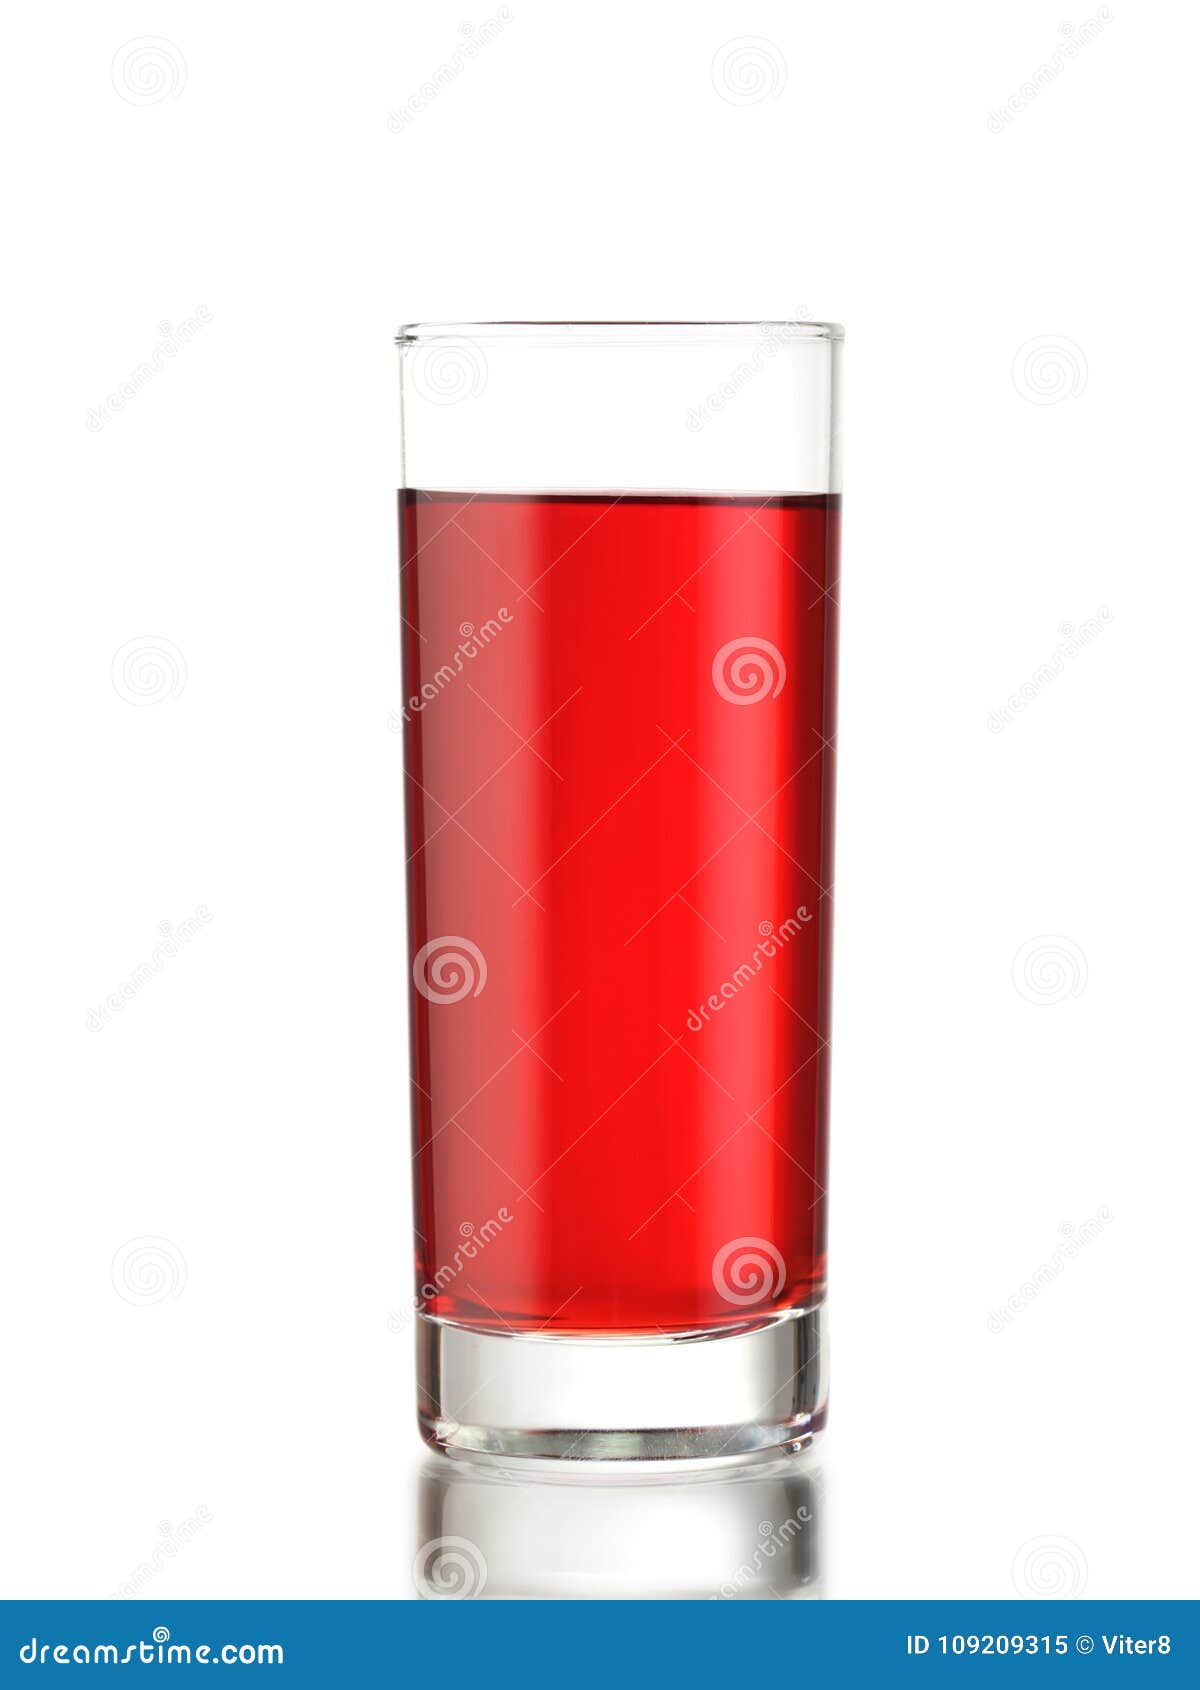 https://thumbs.dreamstime.com/z/red-juice-glass-isolated-white-red-juice-glass-isolated-white-background-109209315.jpg